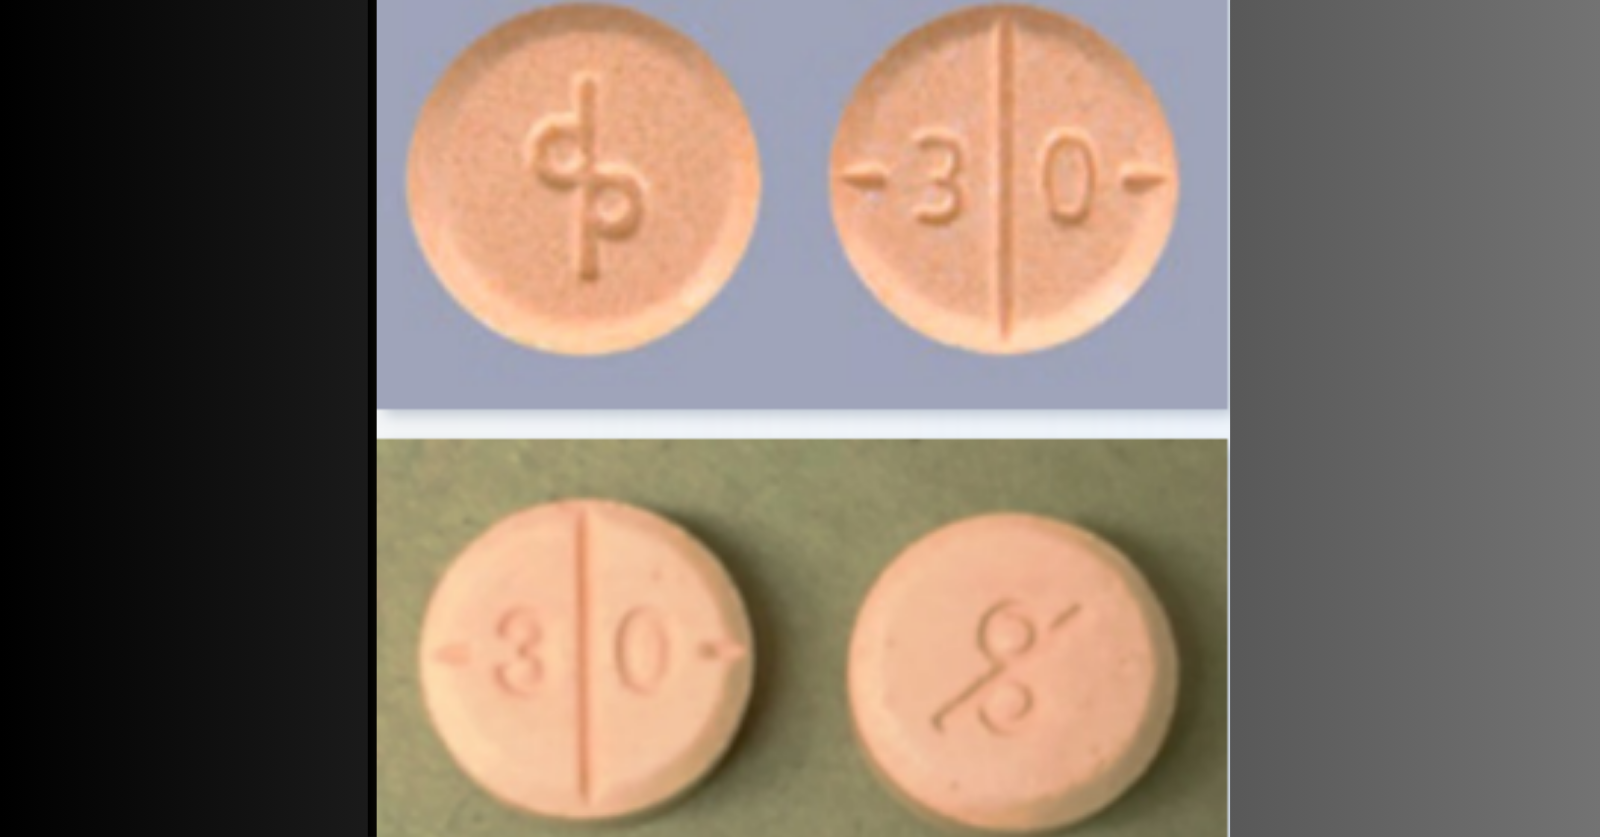 Latest drug trends: liquid fentanyl & methamphetamine pills